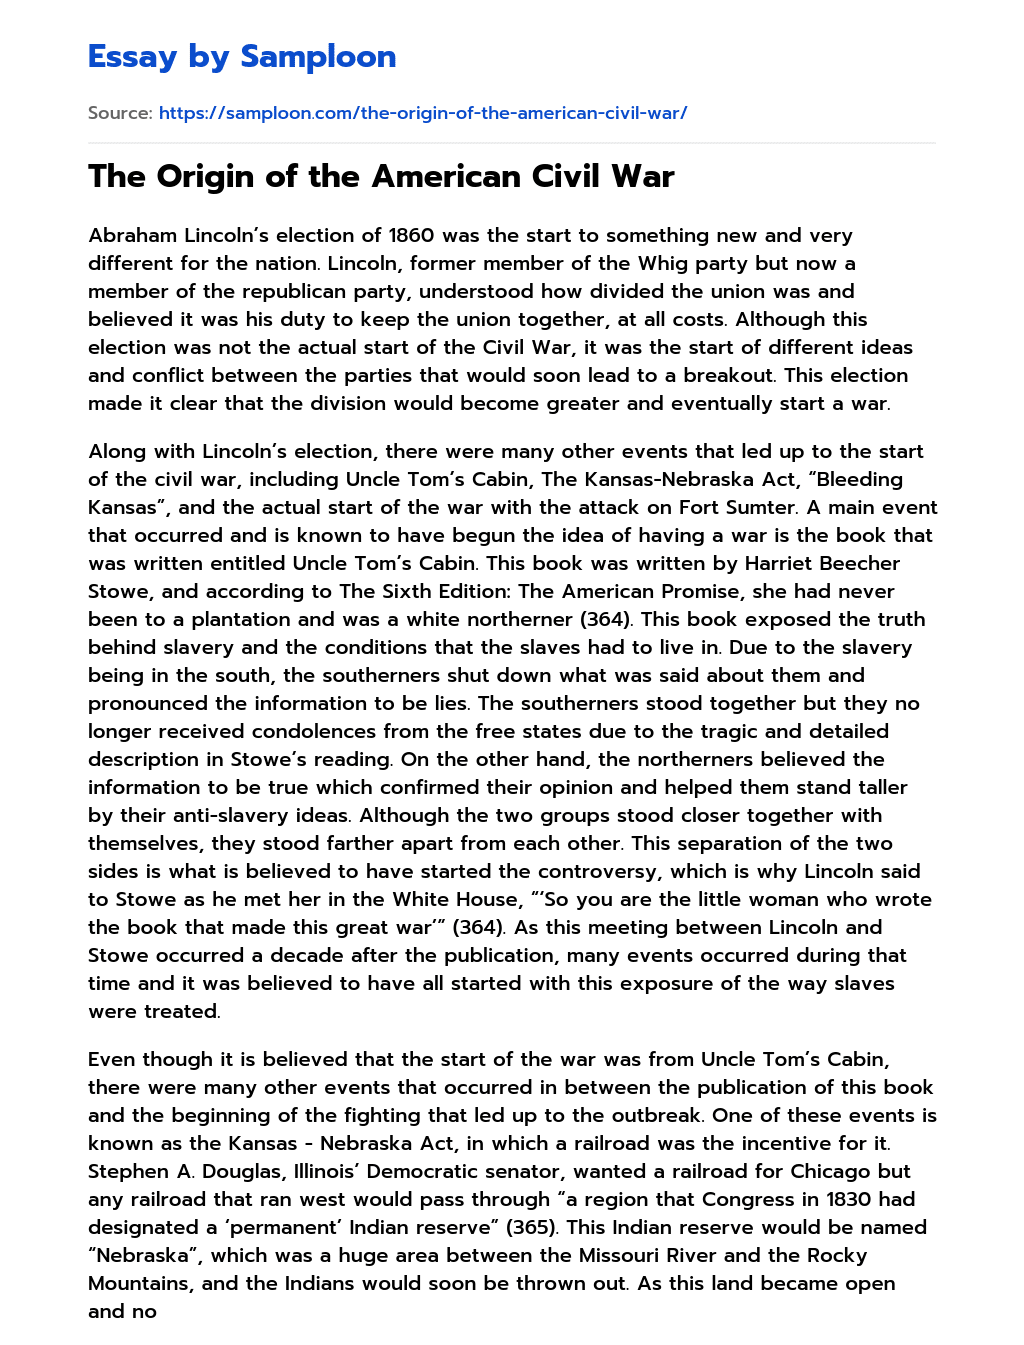 The Origin of the American Civil War essay